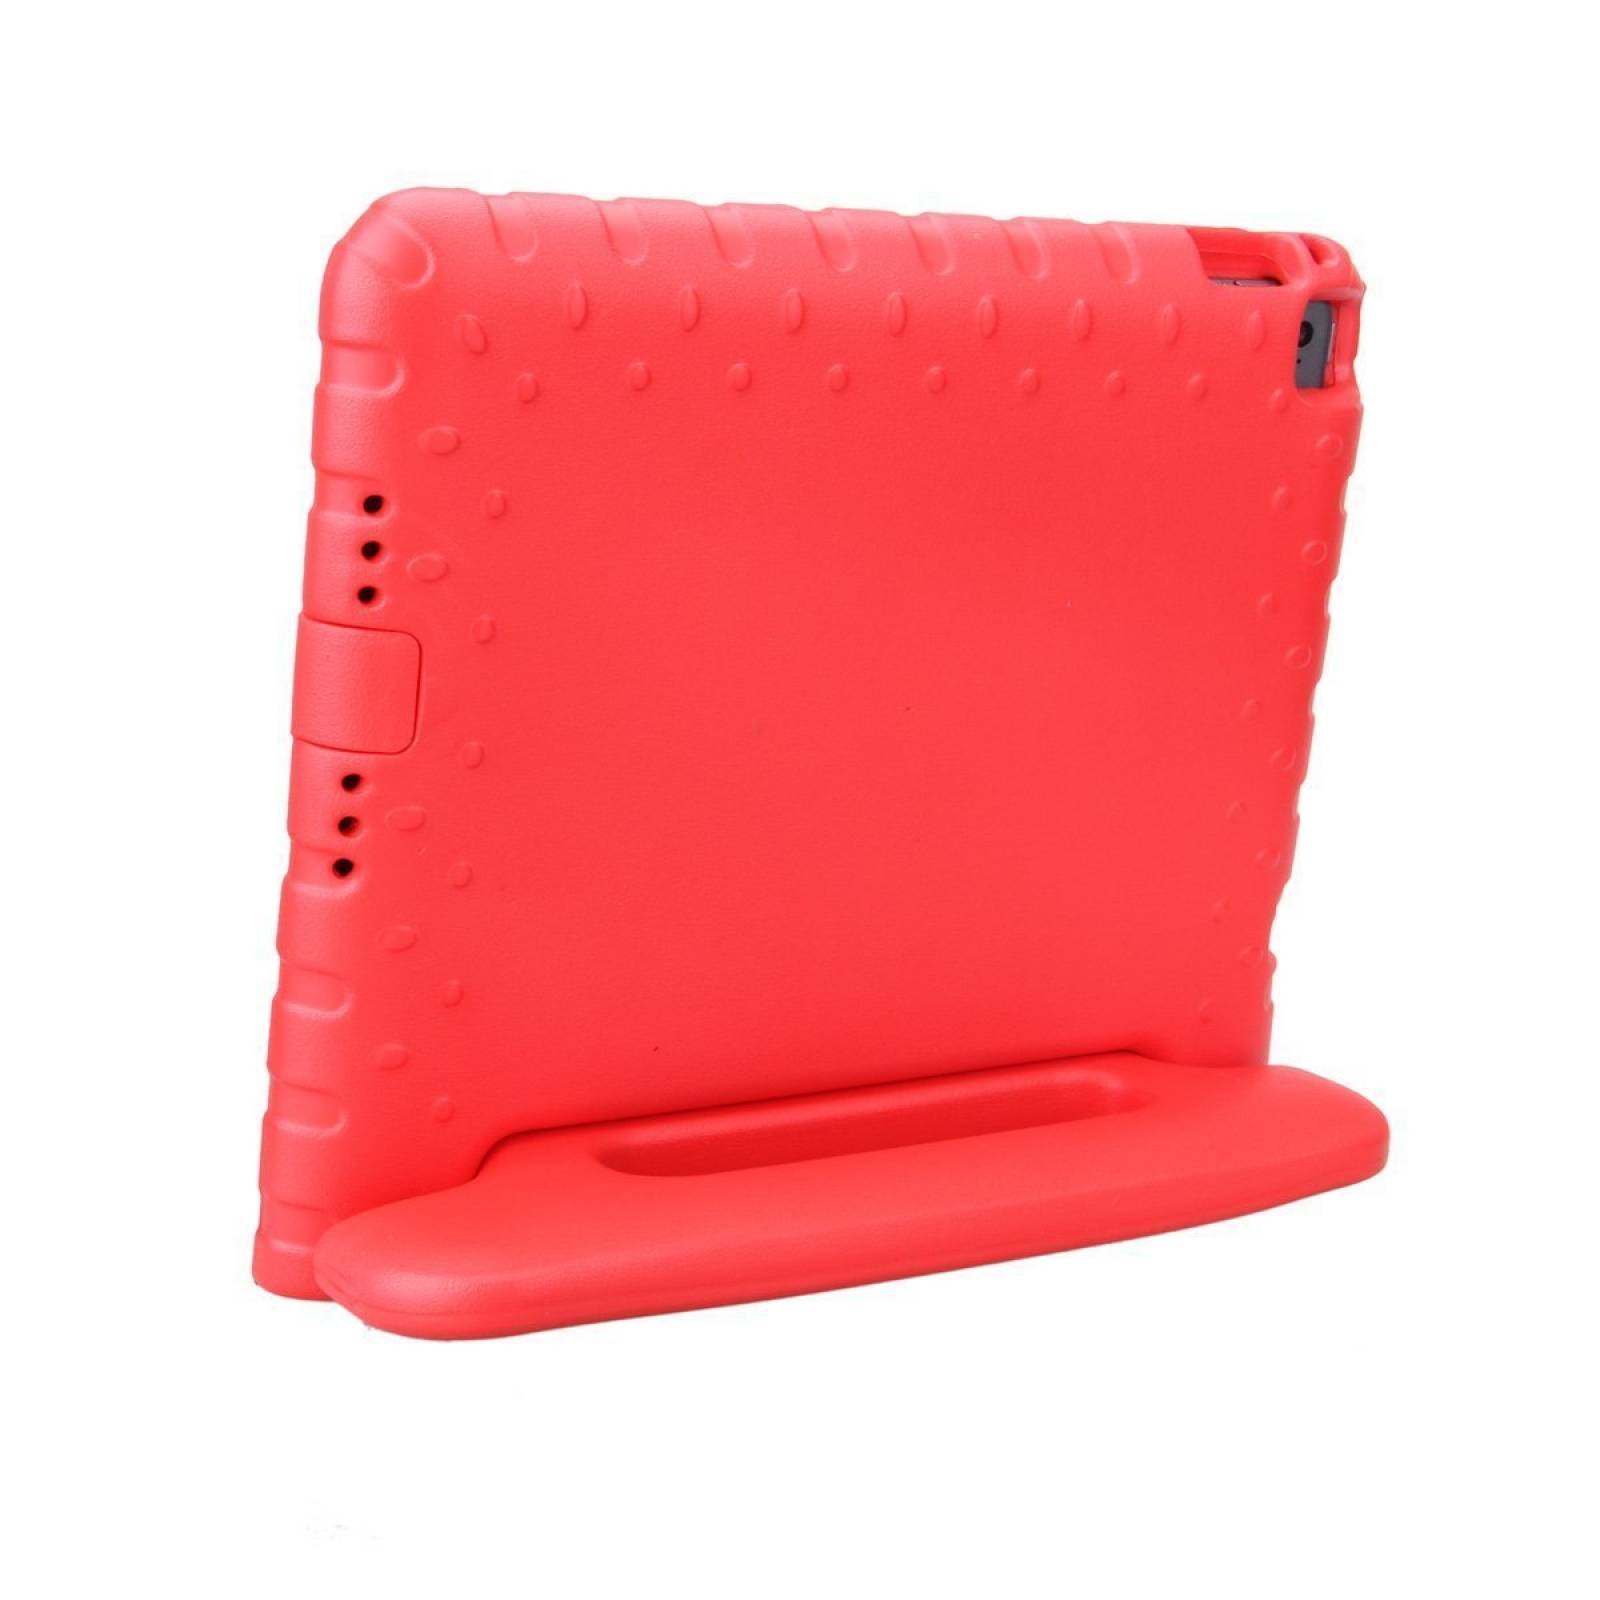 iPad mini funda, hormigas TECH ligero [golpes] fundas - Rojo